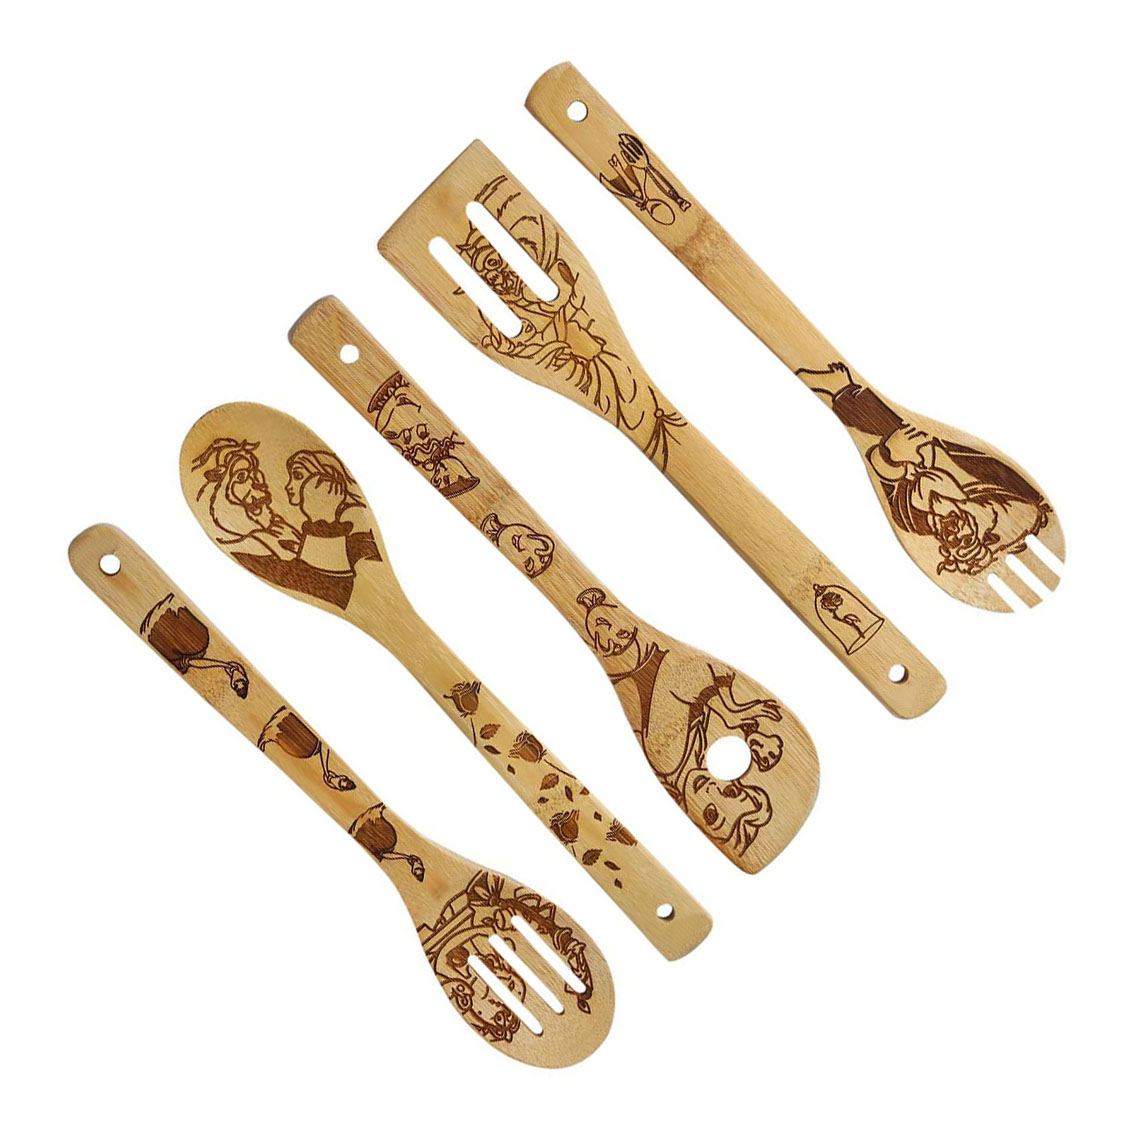 personalized bamboo wood utensils